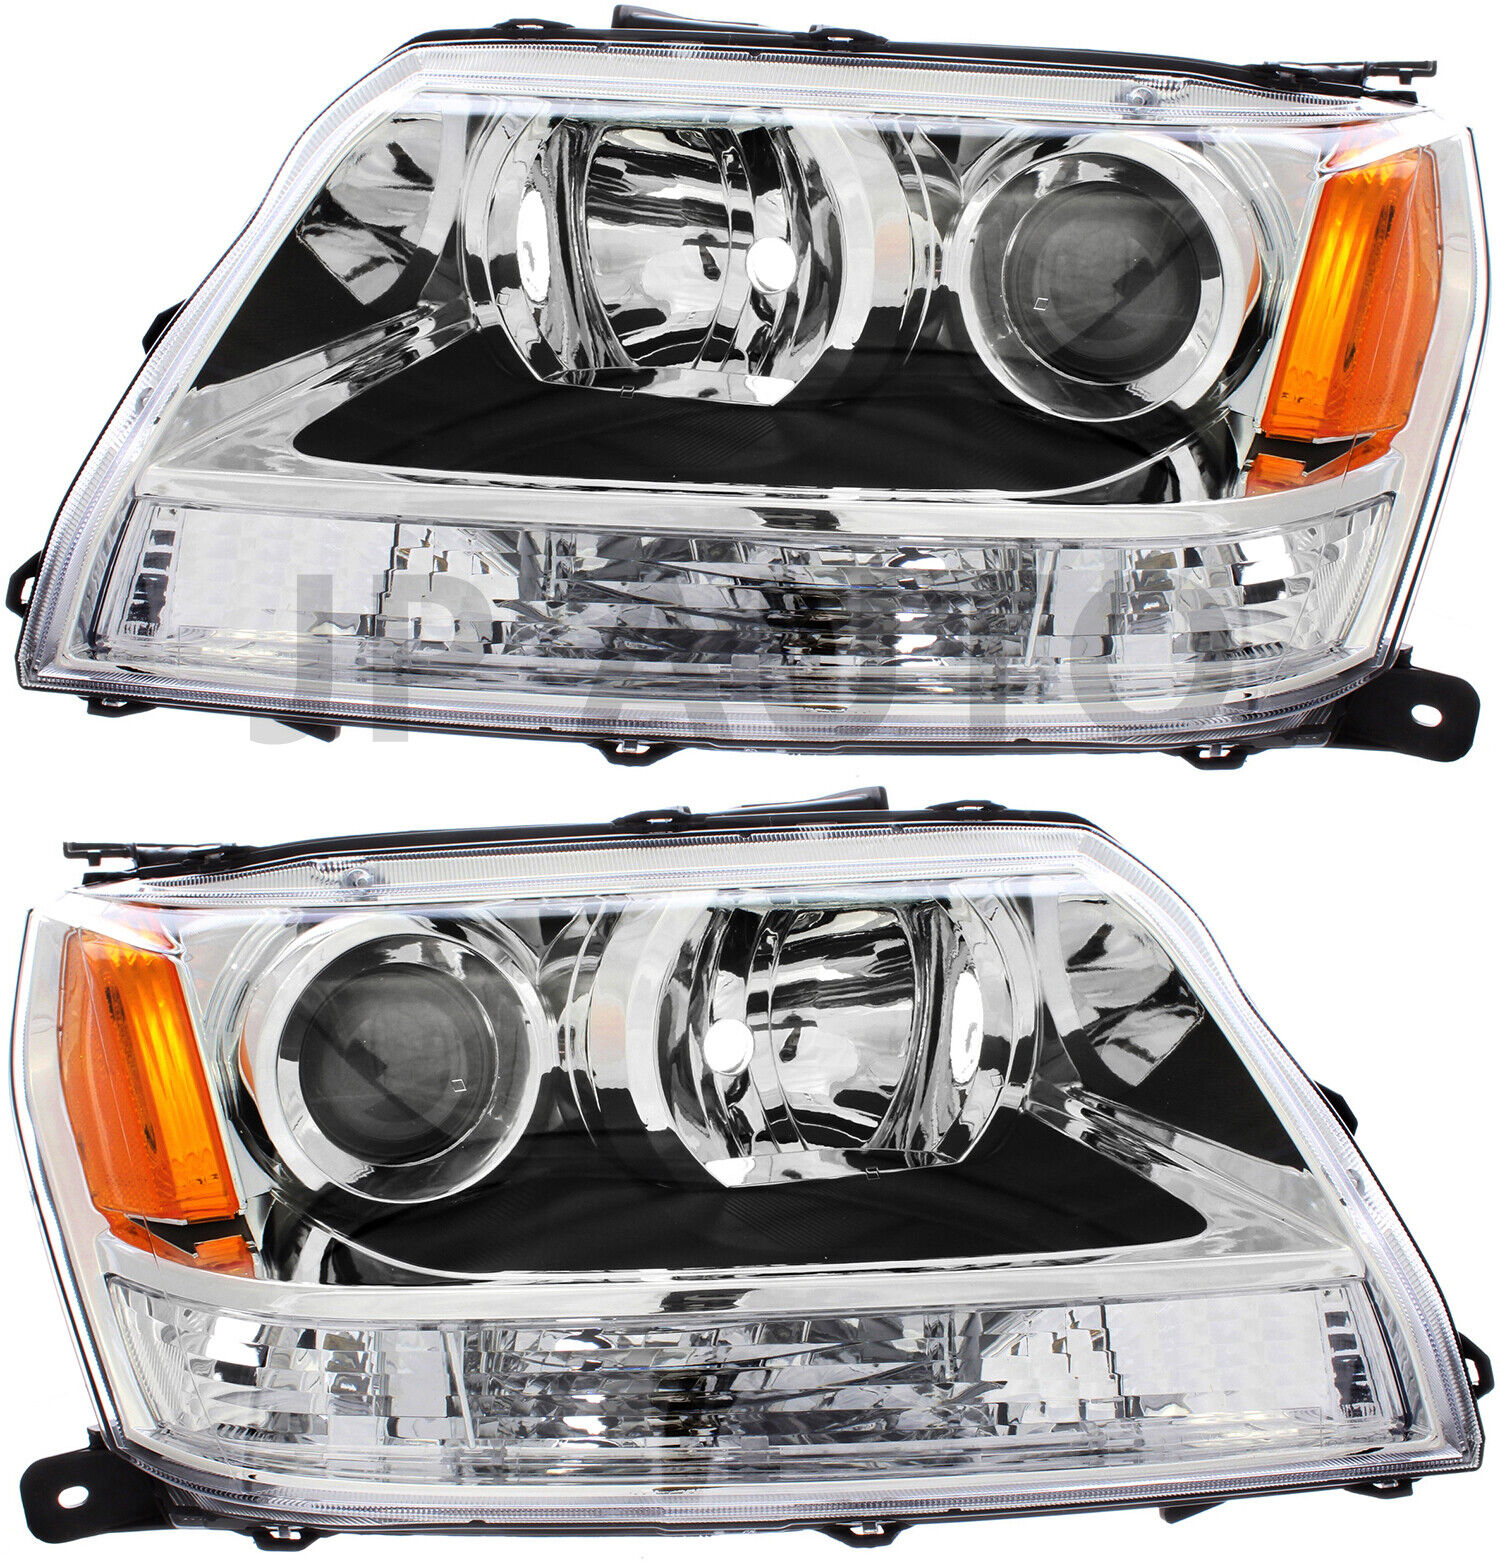 For 2009-2013 Suzuki Grand Vitara Headlight Halogen Set Pair